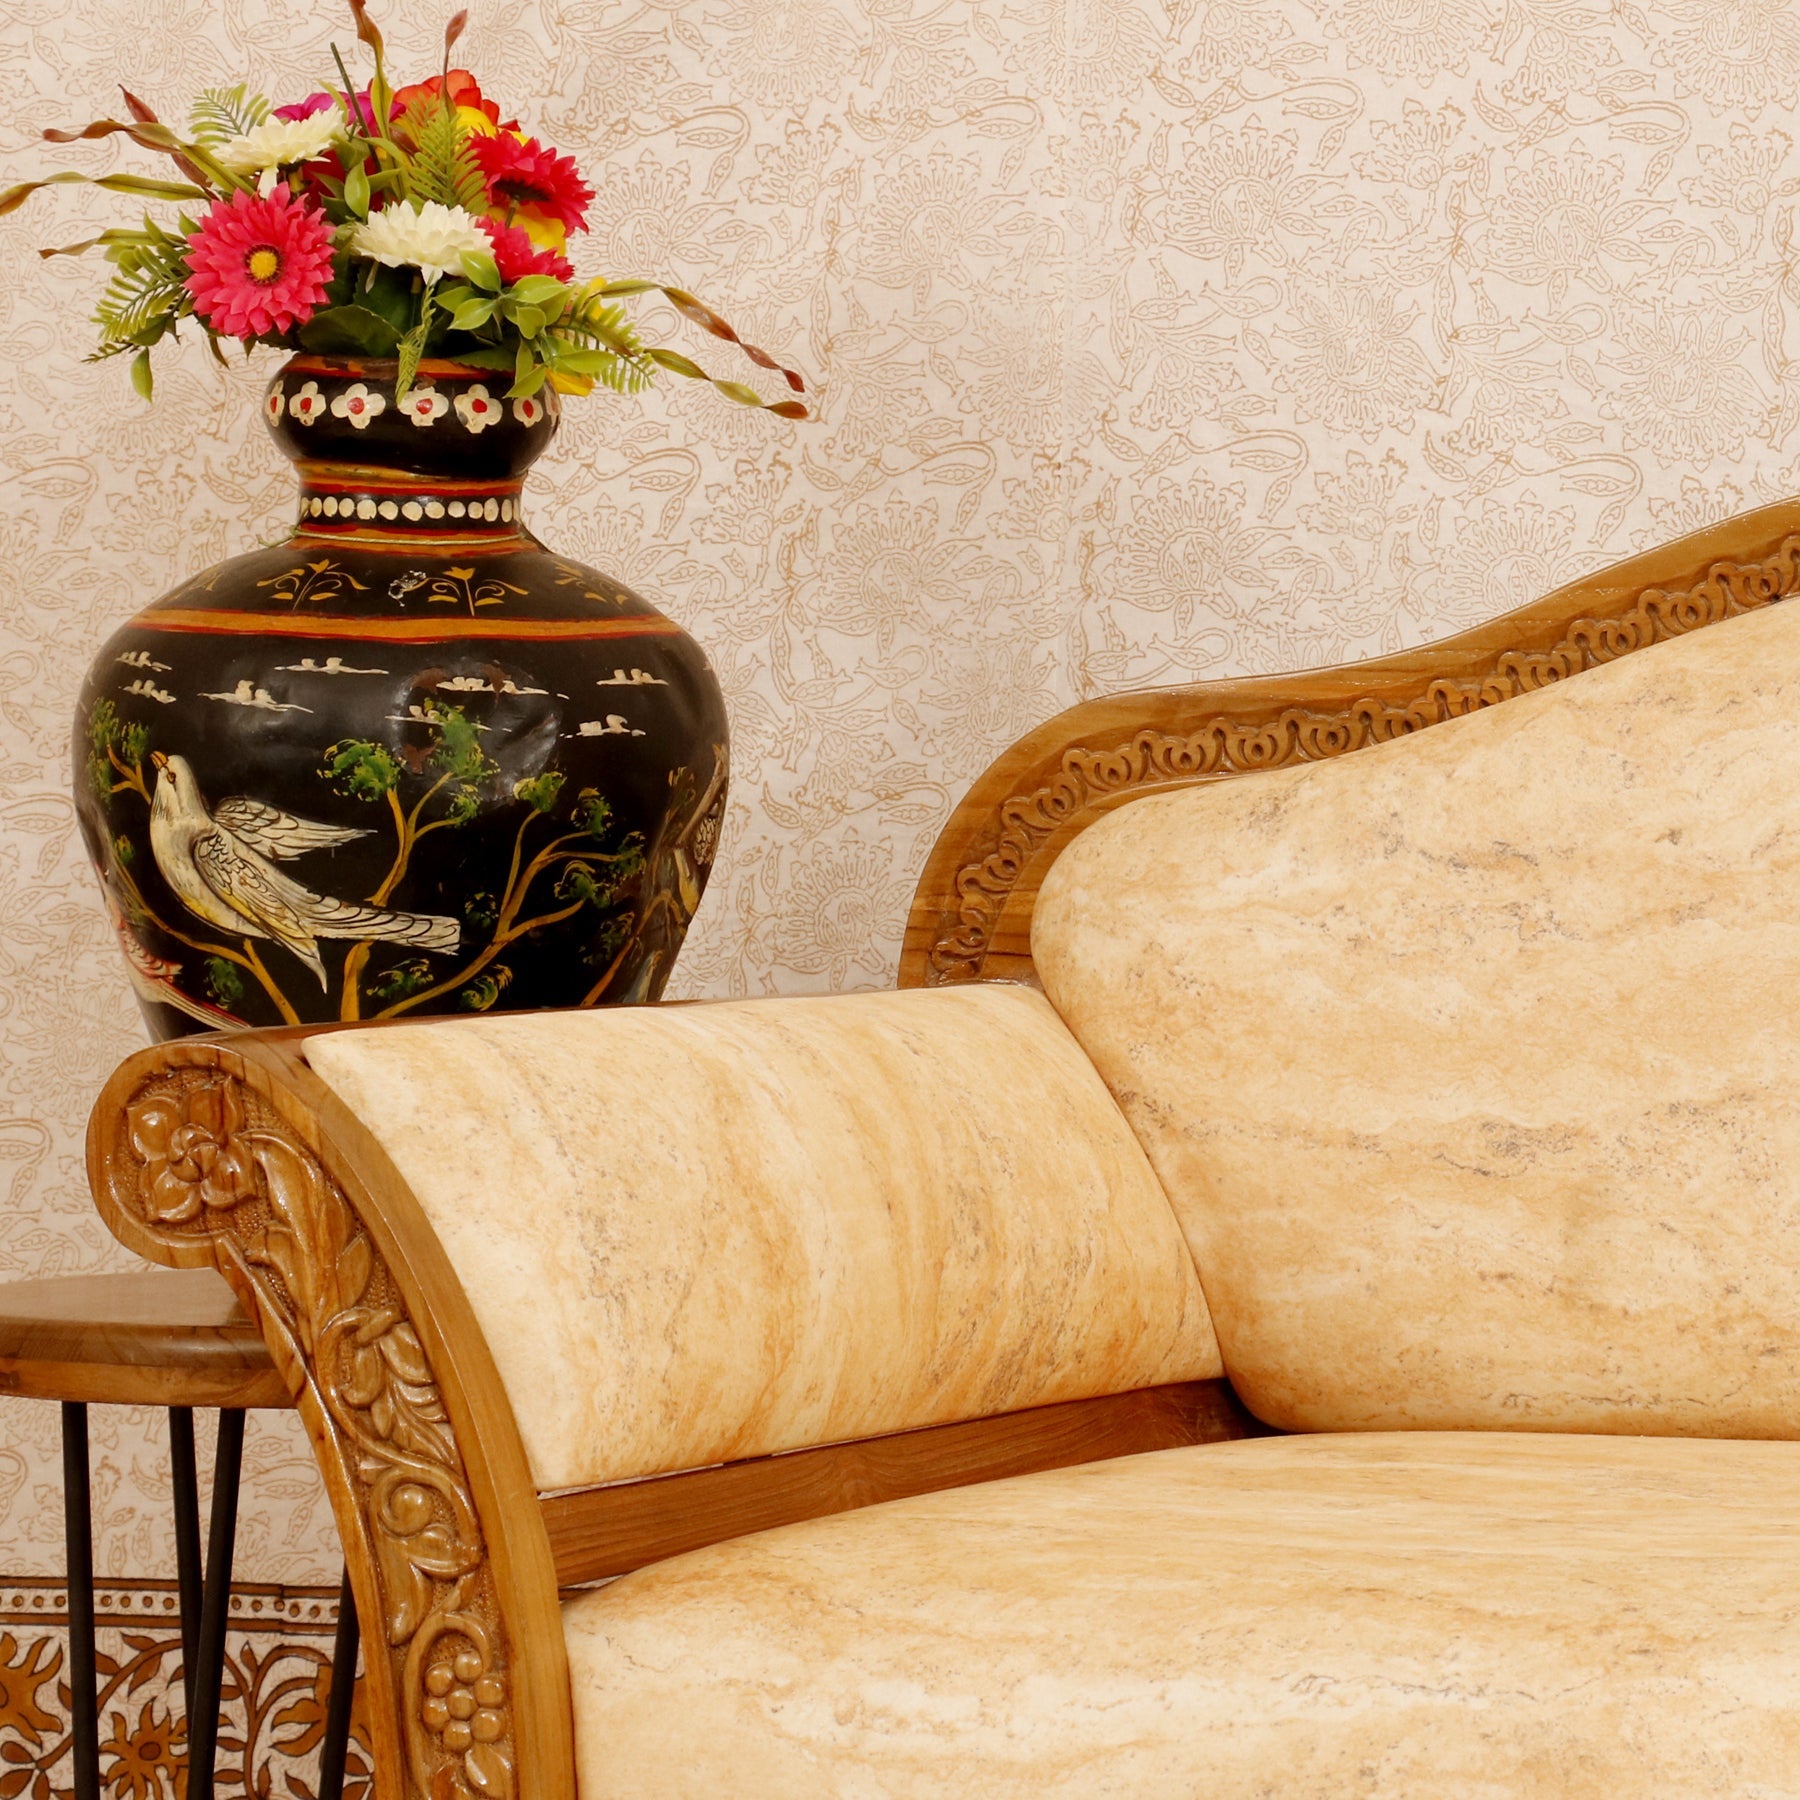 Intricate carved teak wood Single seater sofa Sofa